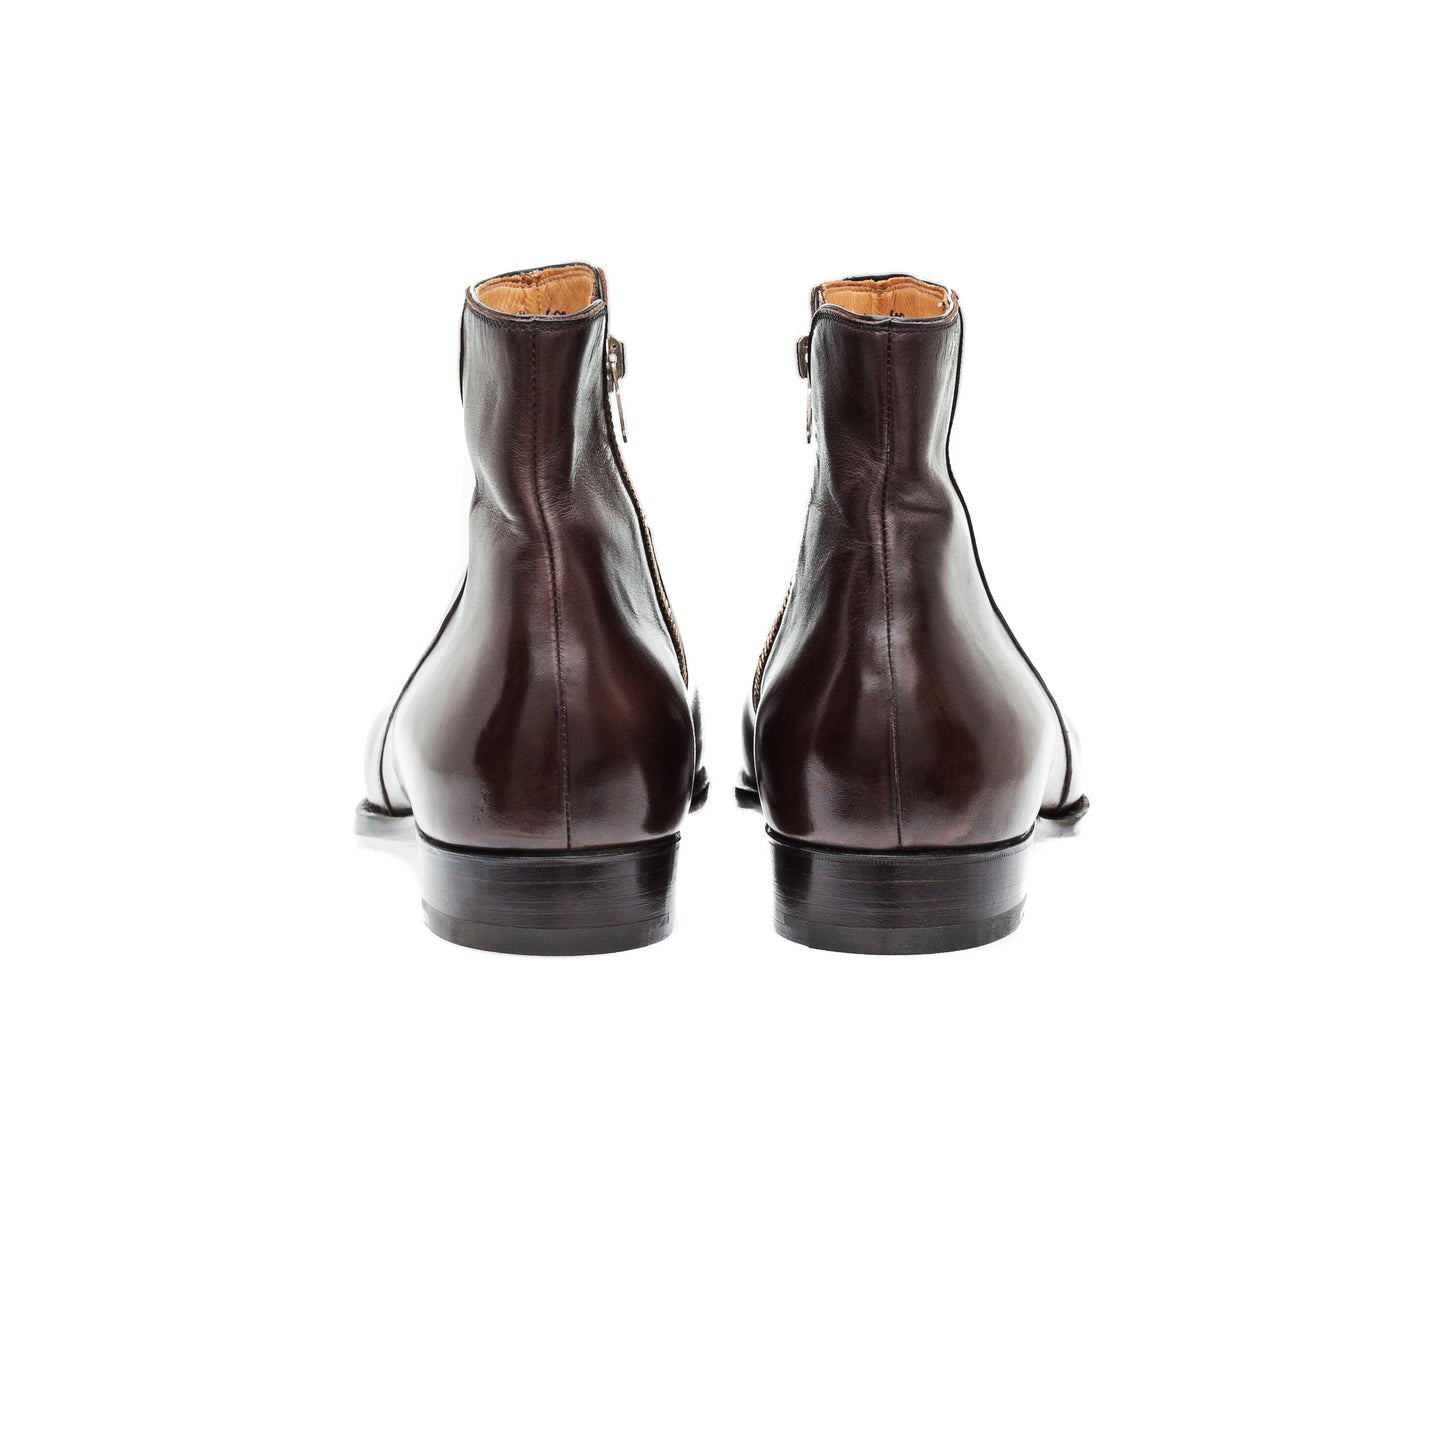 Plain boot with zipper in dark brown Espresso calf leather